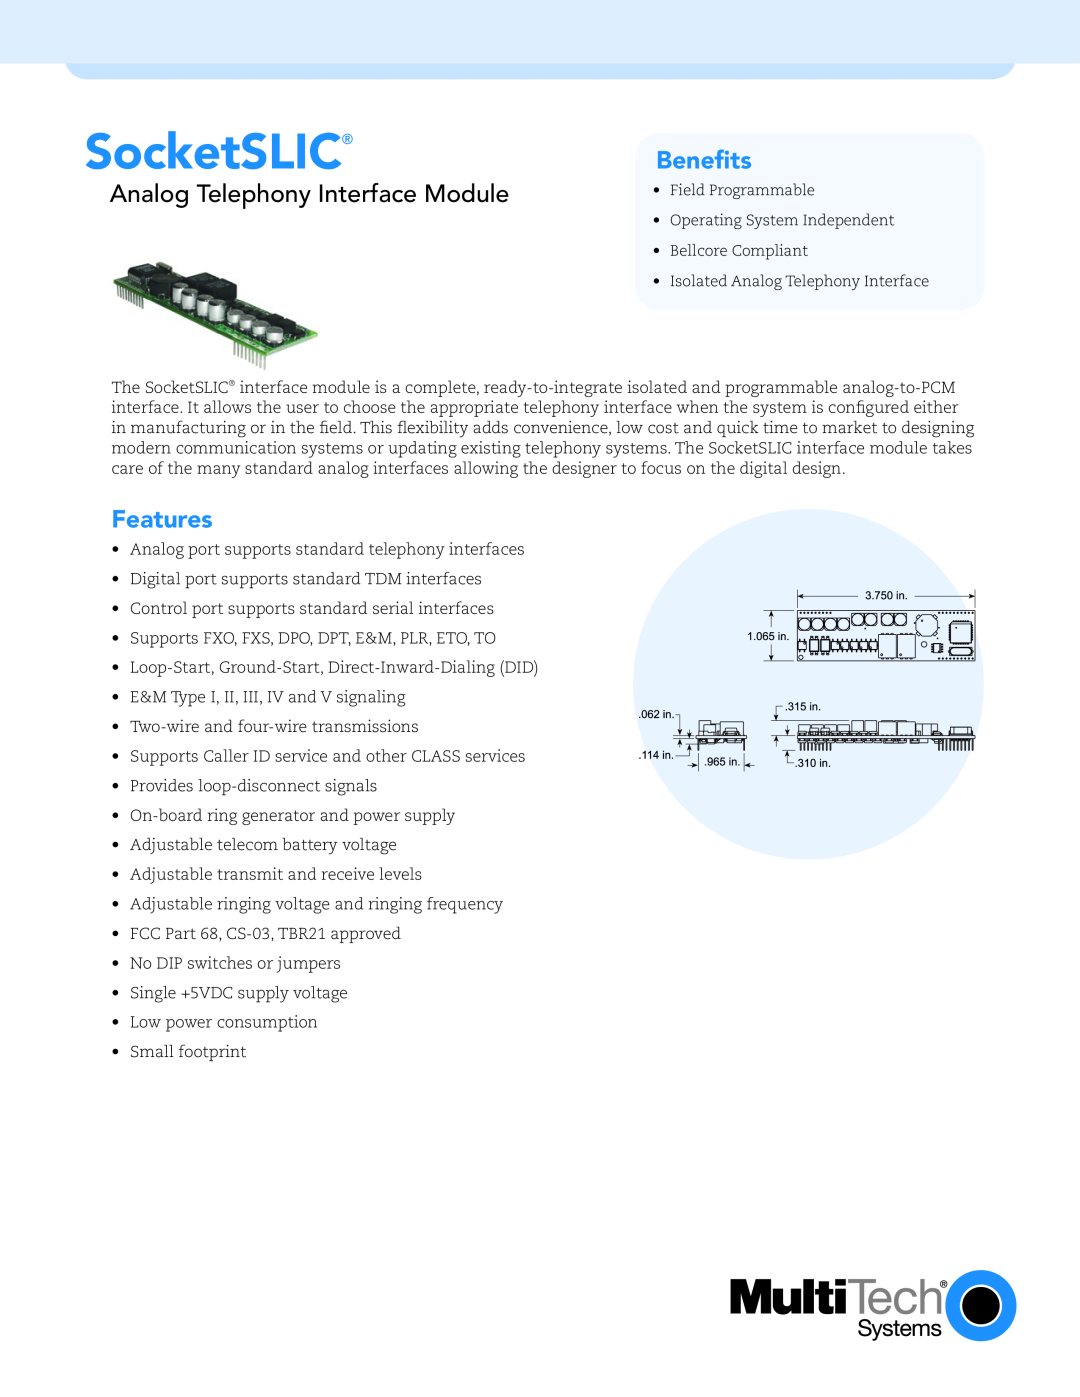 Multi-Tech Systems TBR21 manual SocketSLIC, Beneﬁts, Analog Telephony Interface Module, Features 